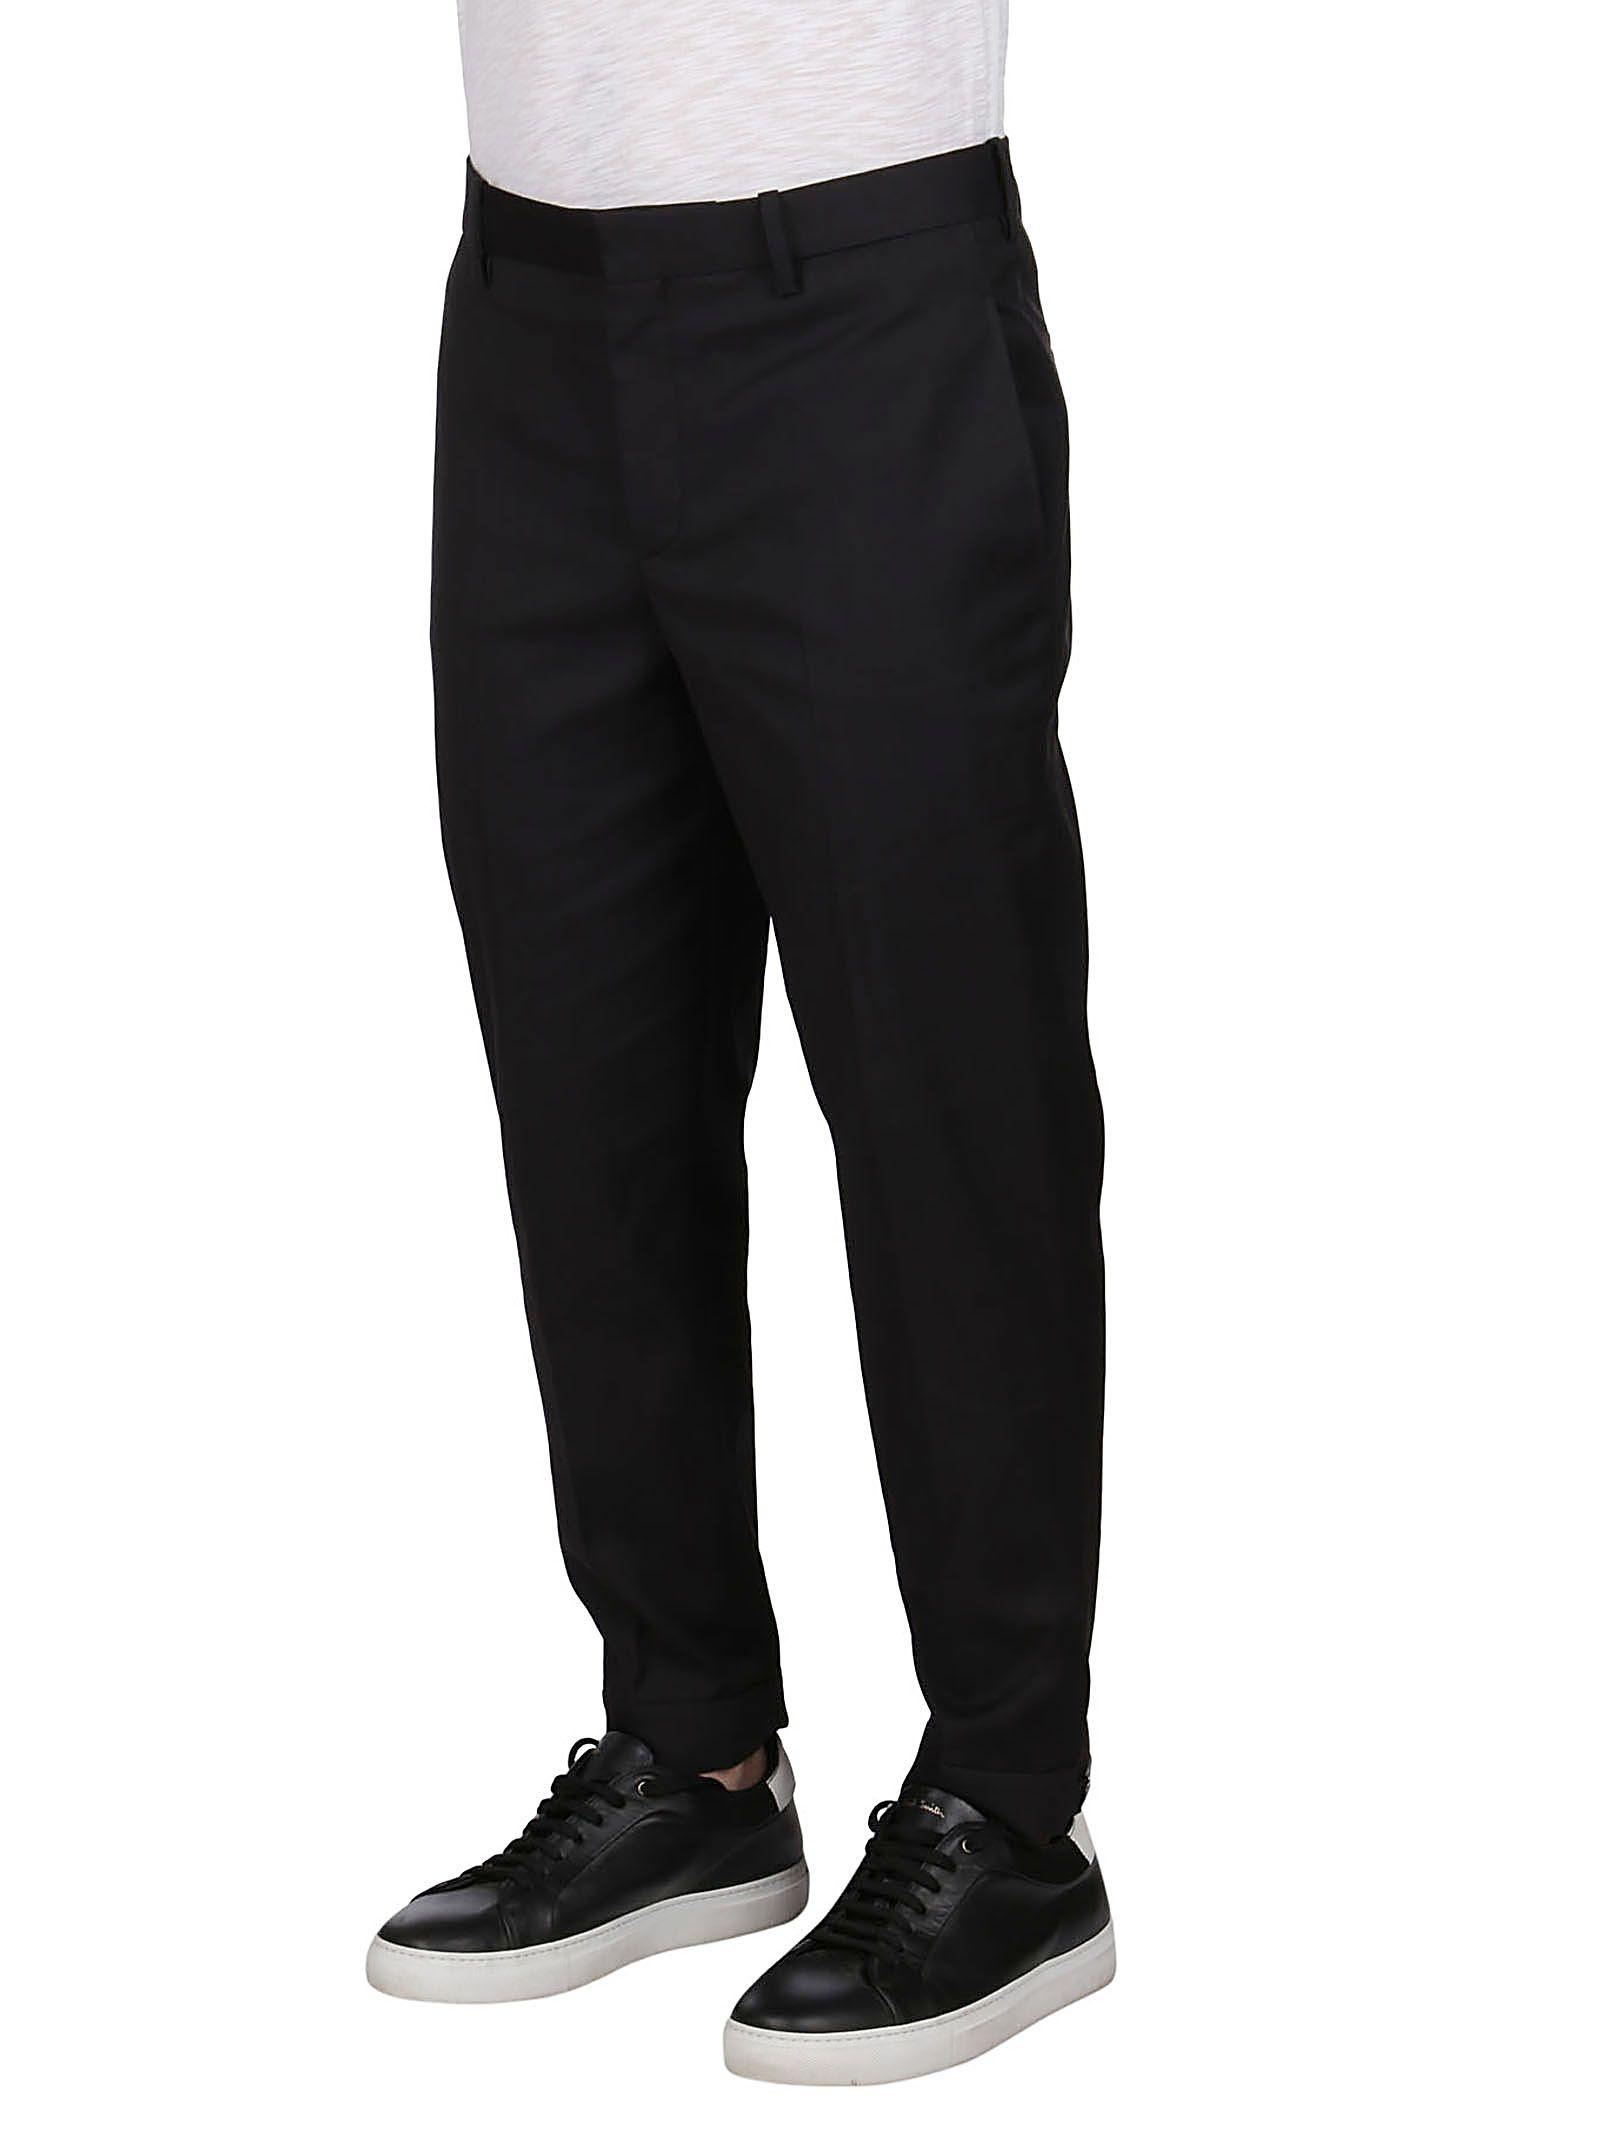 Neil Barrett Synthetic Polyester Pants in Black for Men - Lyst